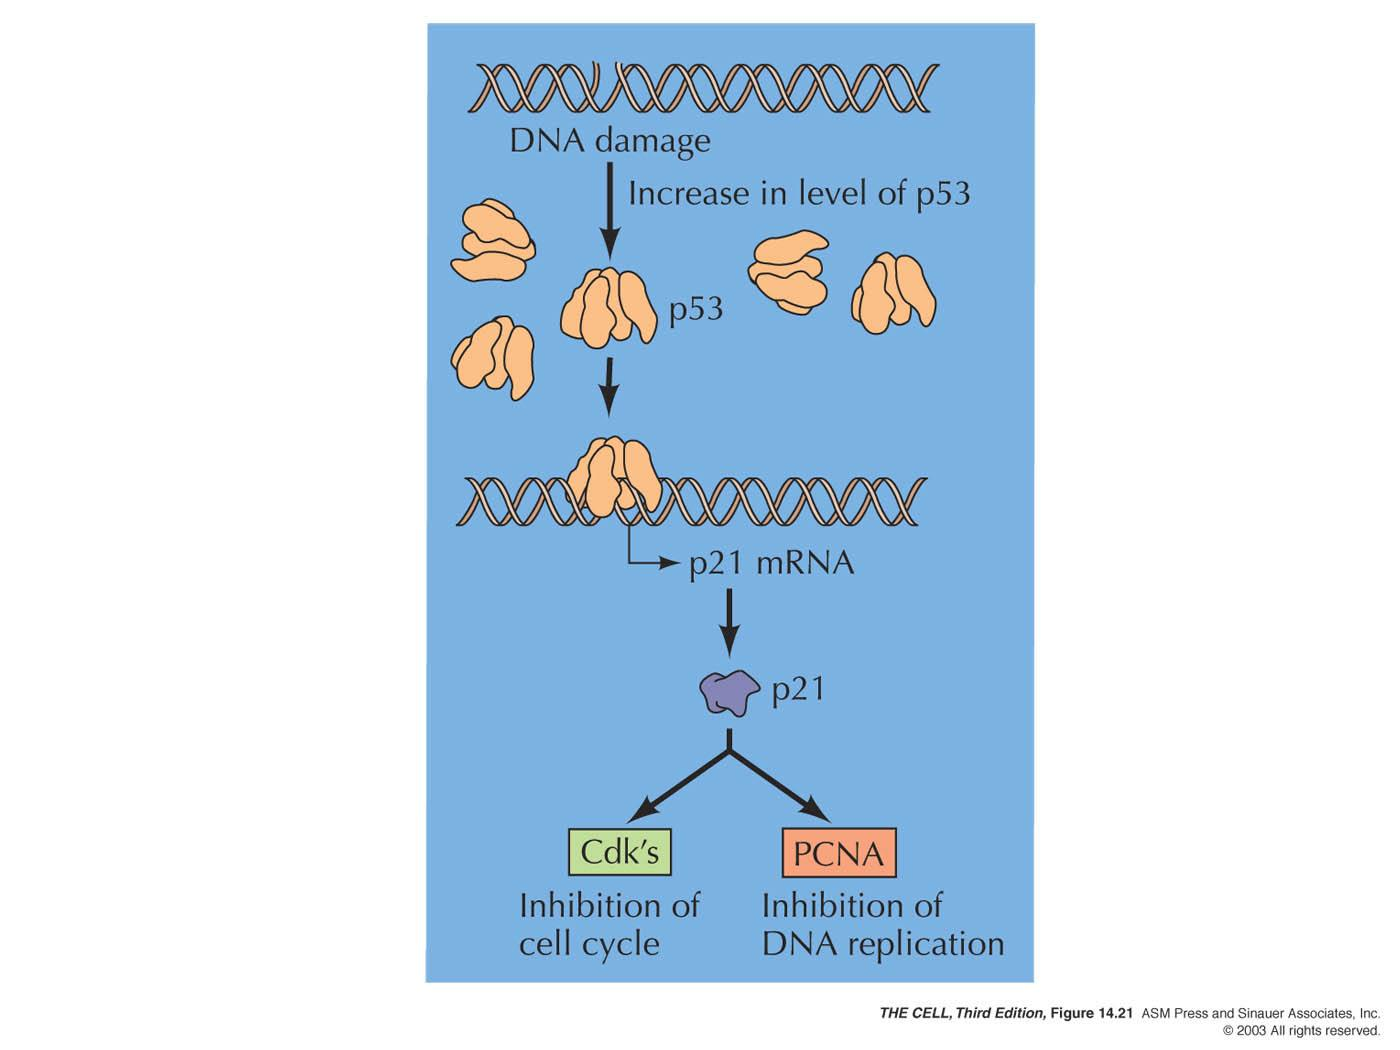 PCNA (Proliferating cell nuclear antigen): DNA pol